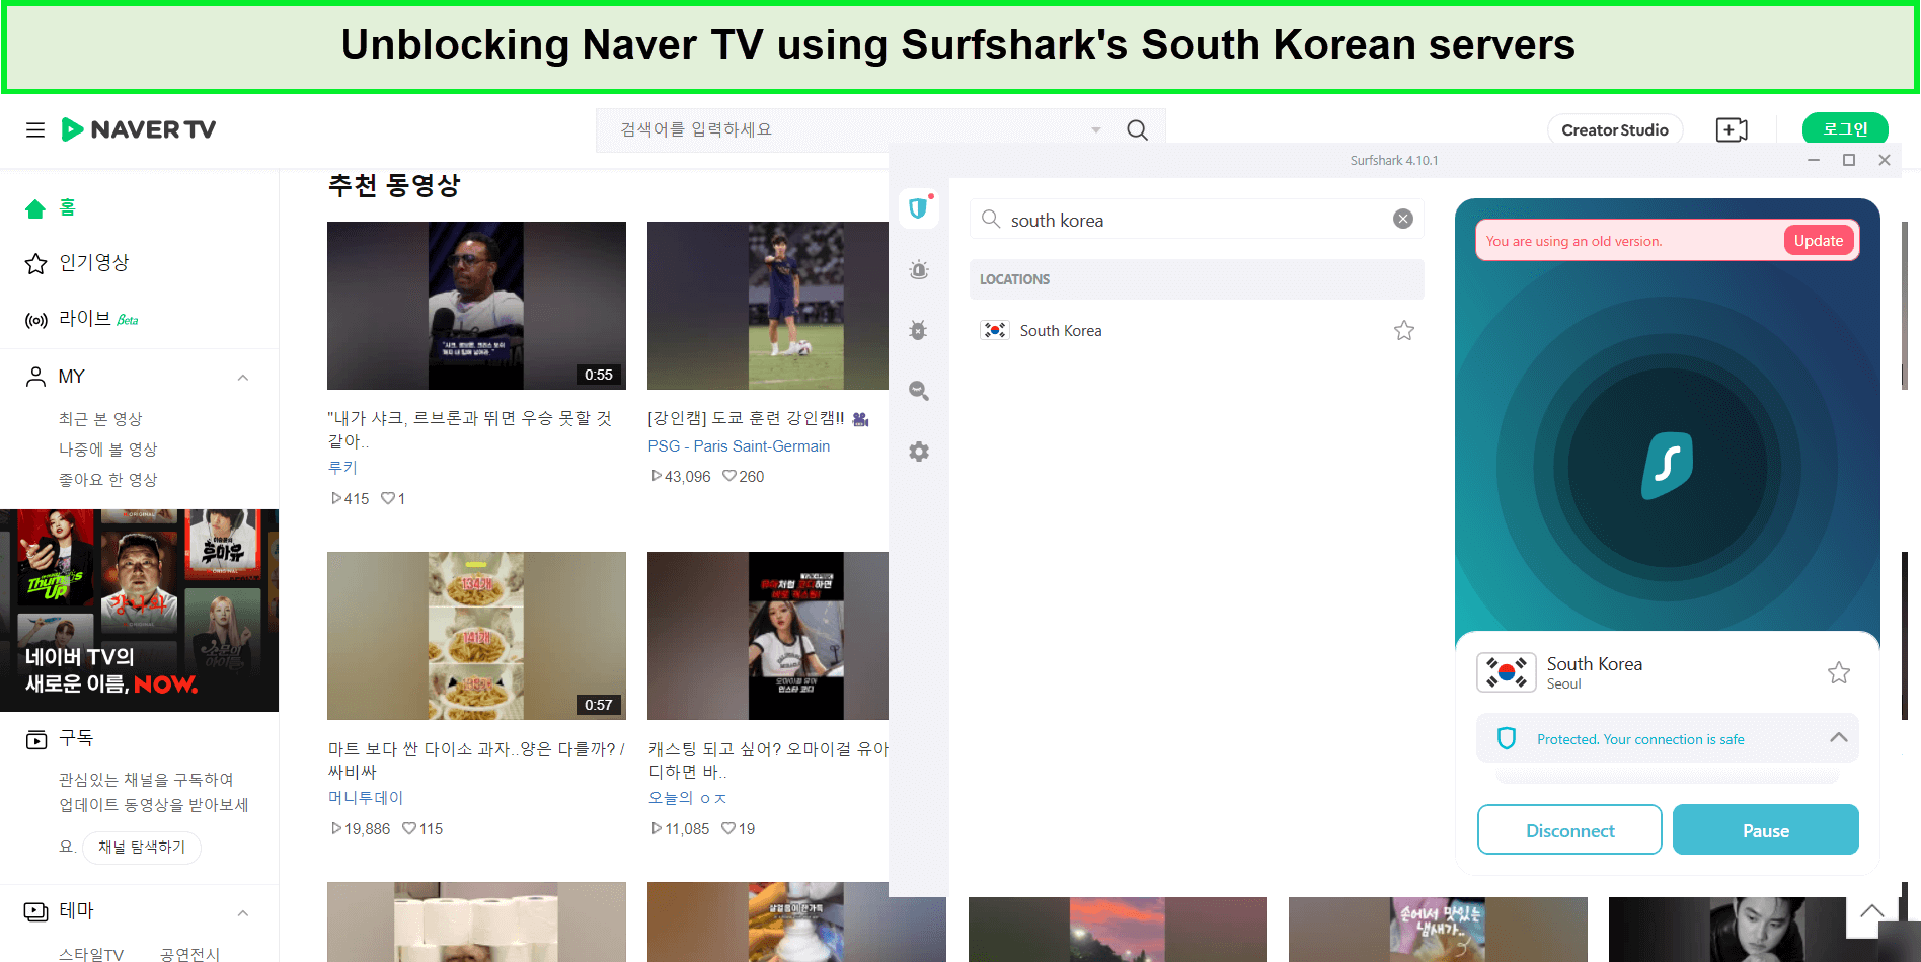 naver-tv-outside-South Korea-unblocked-by-surfshark